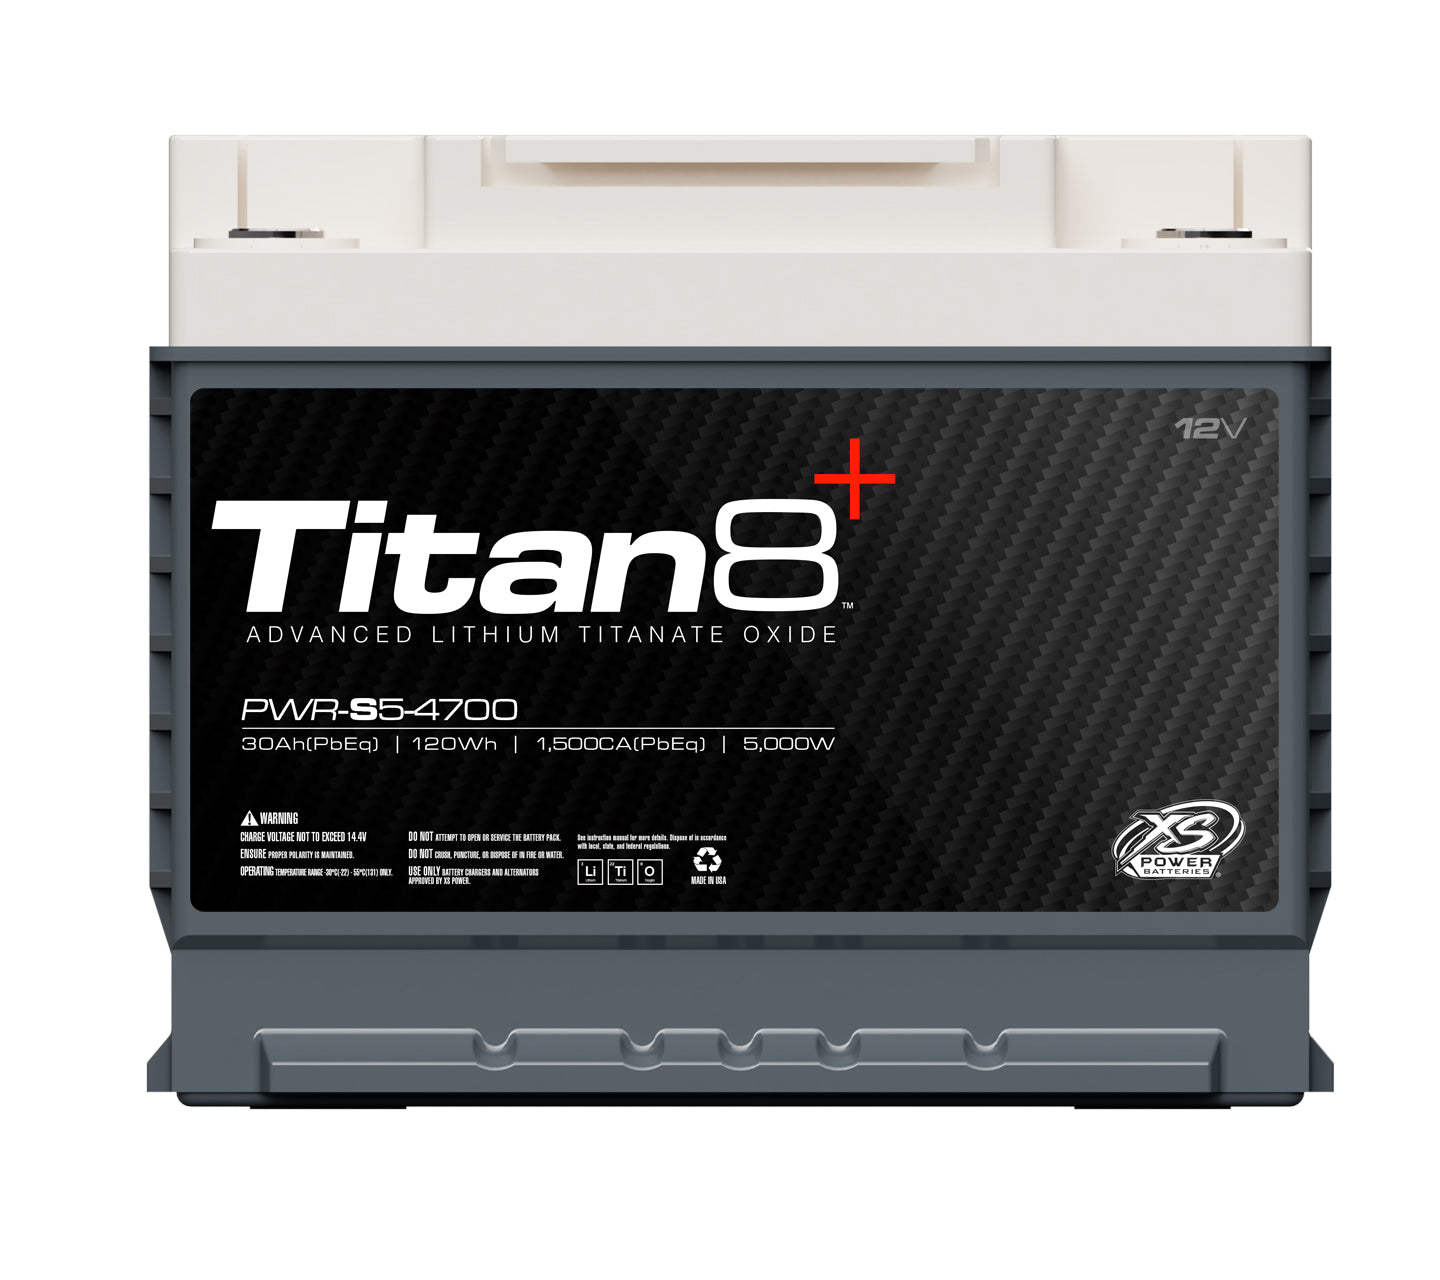 PWR-S5-4700 XS Power Titan8 12VDC Group 47 Lithium LTO Car Audio Vehicle Battery 5000W 120Wh